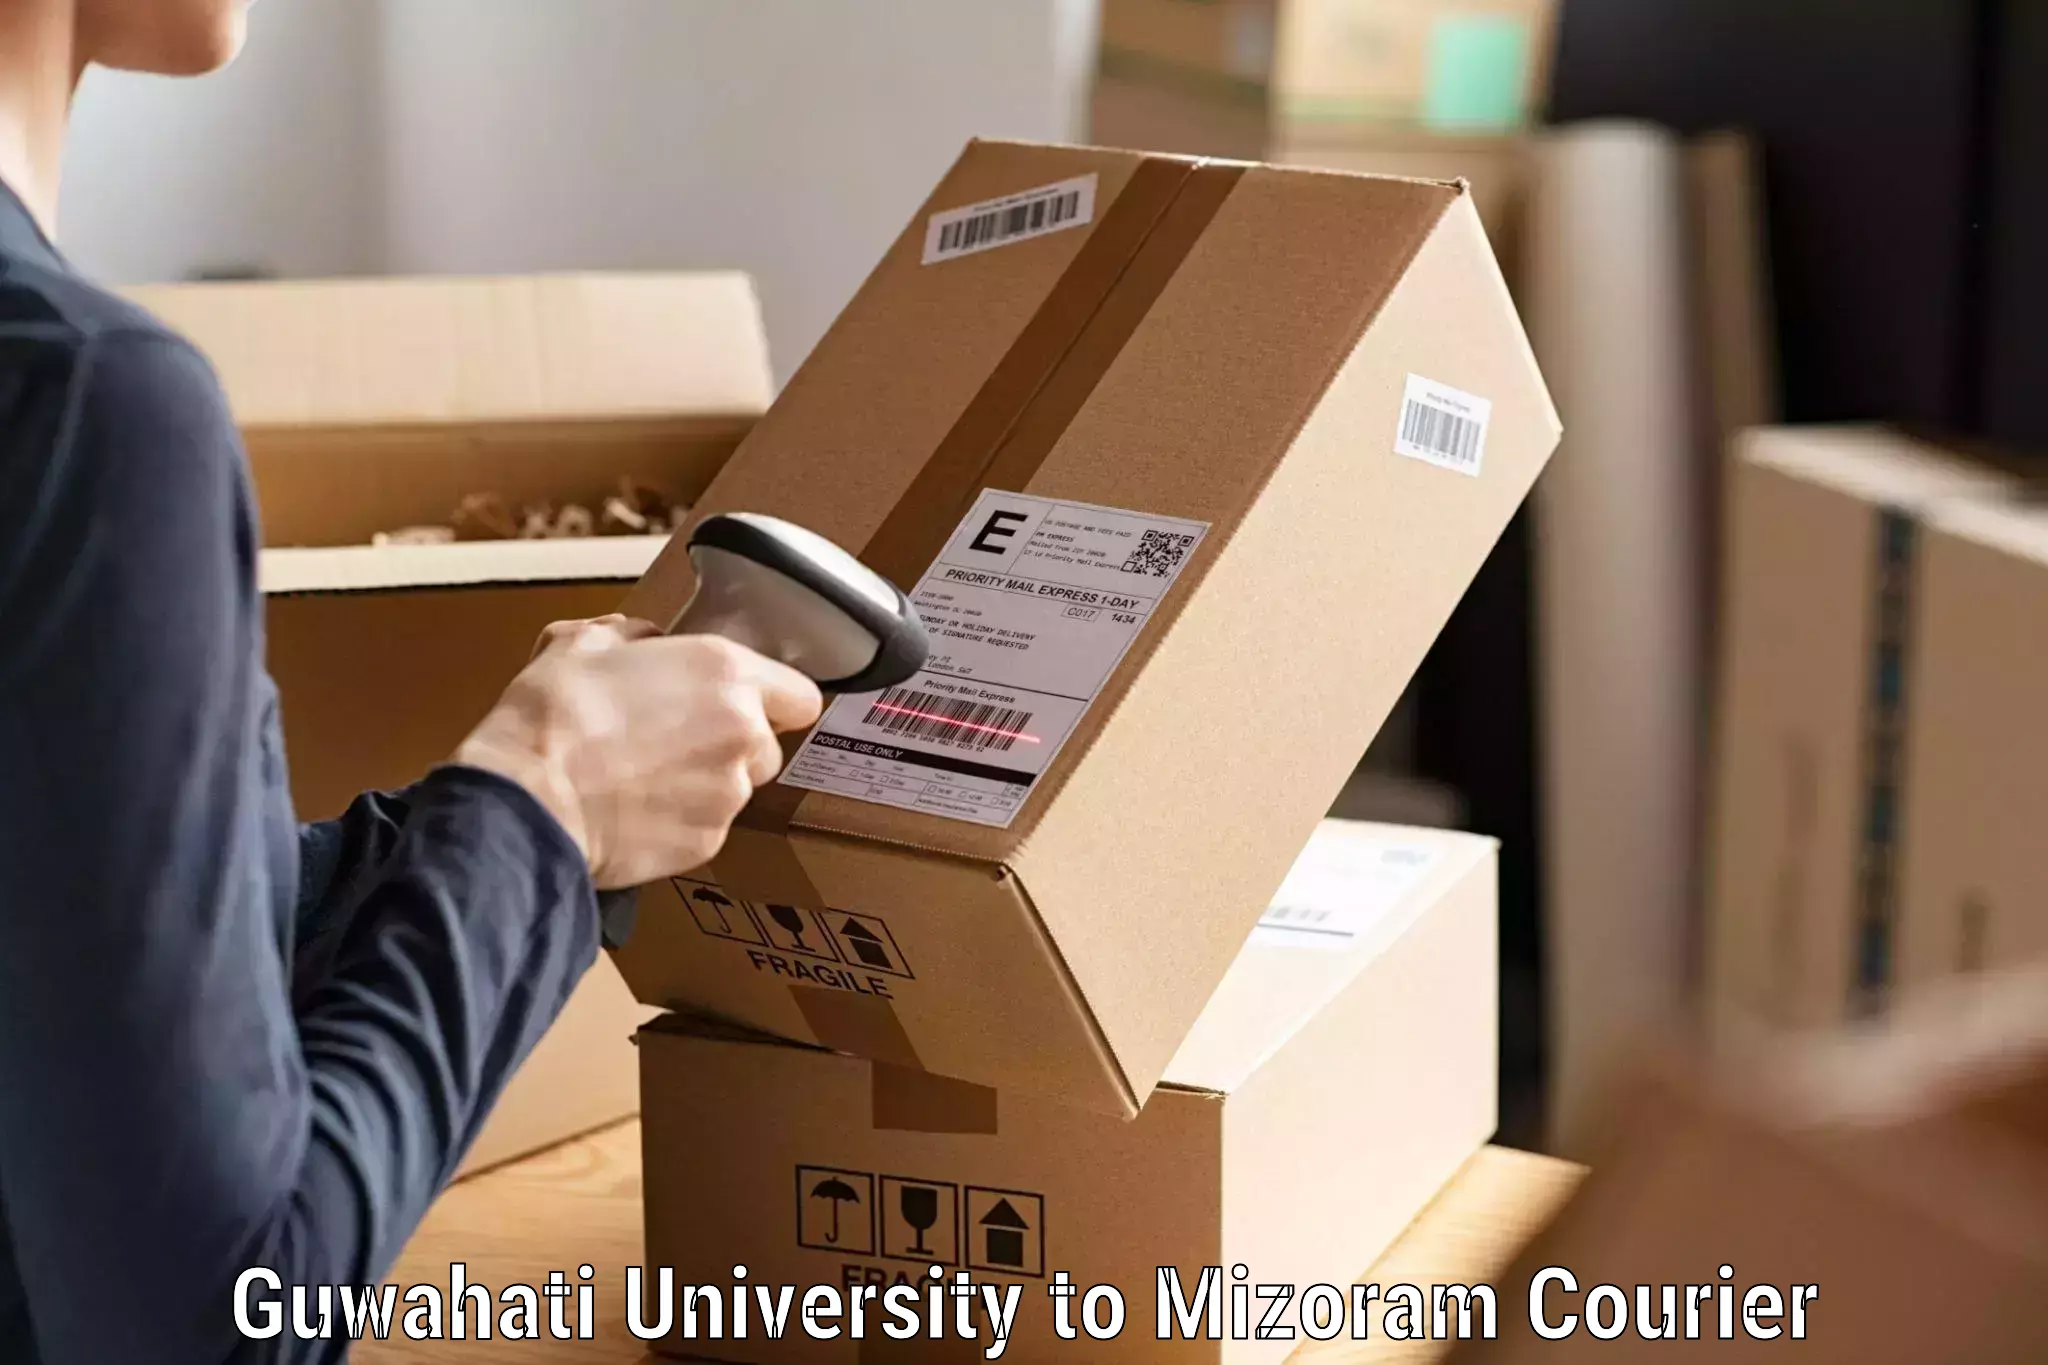 On-call courier service Guwahati University to Aizawl